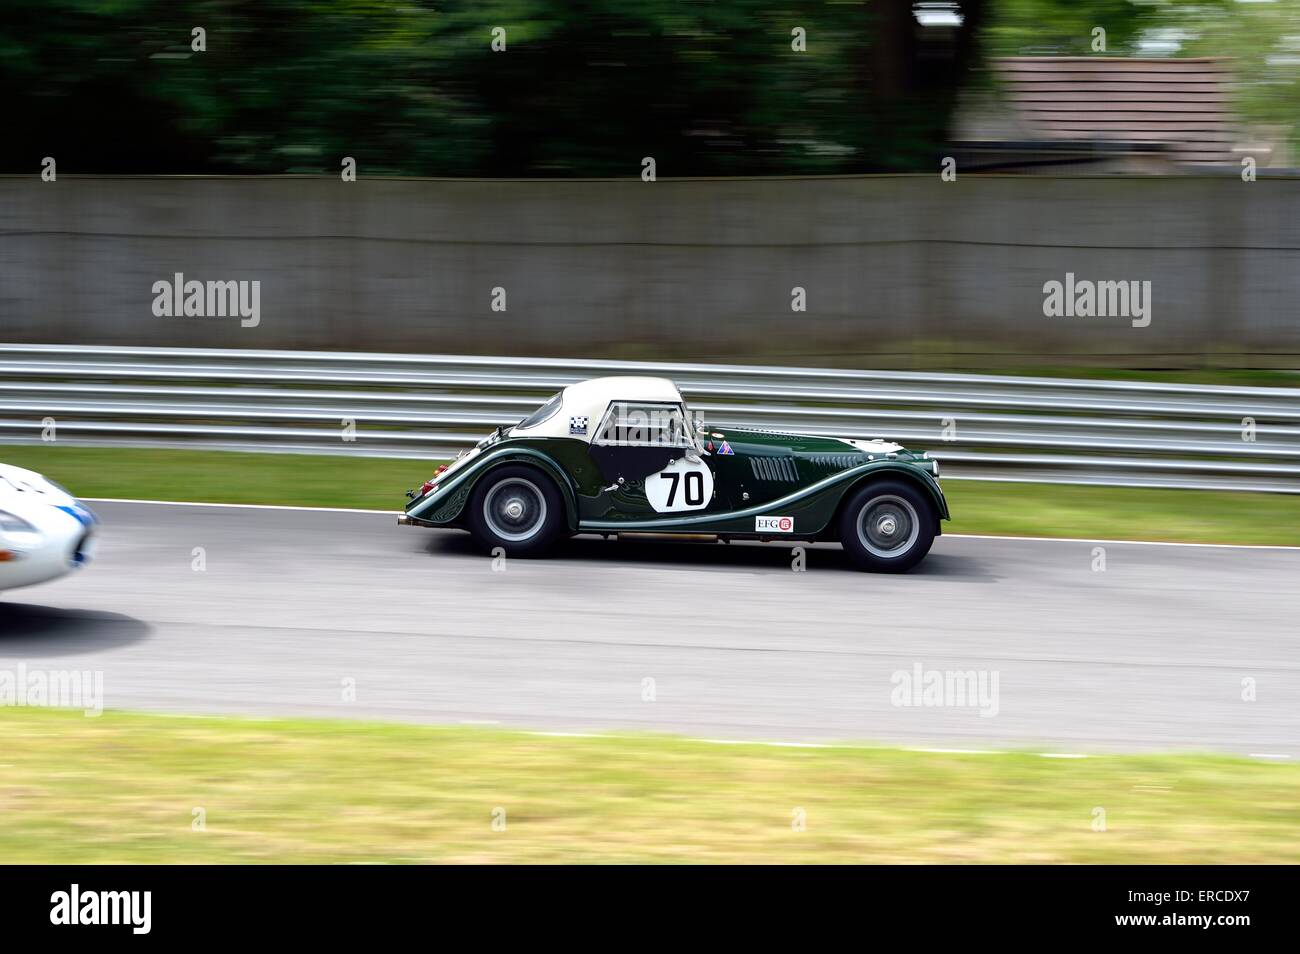 Historique de Brands Hatch masters classic car Auto Racing Banque D'Images